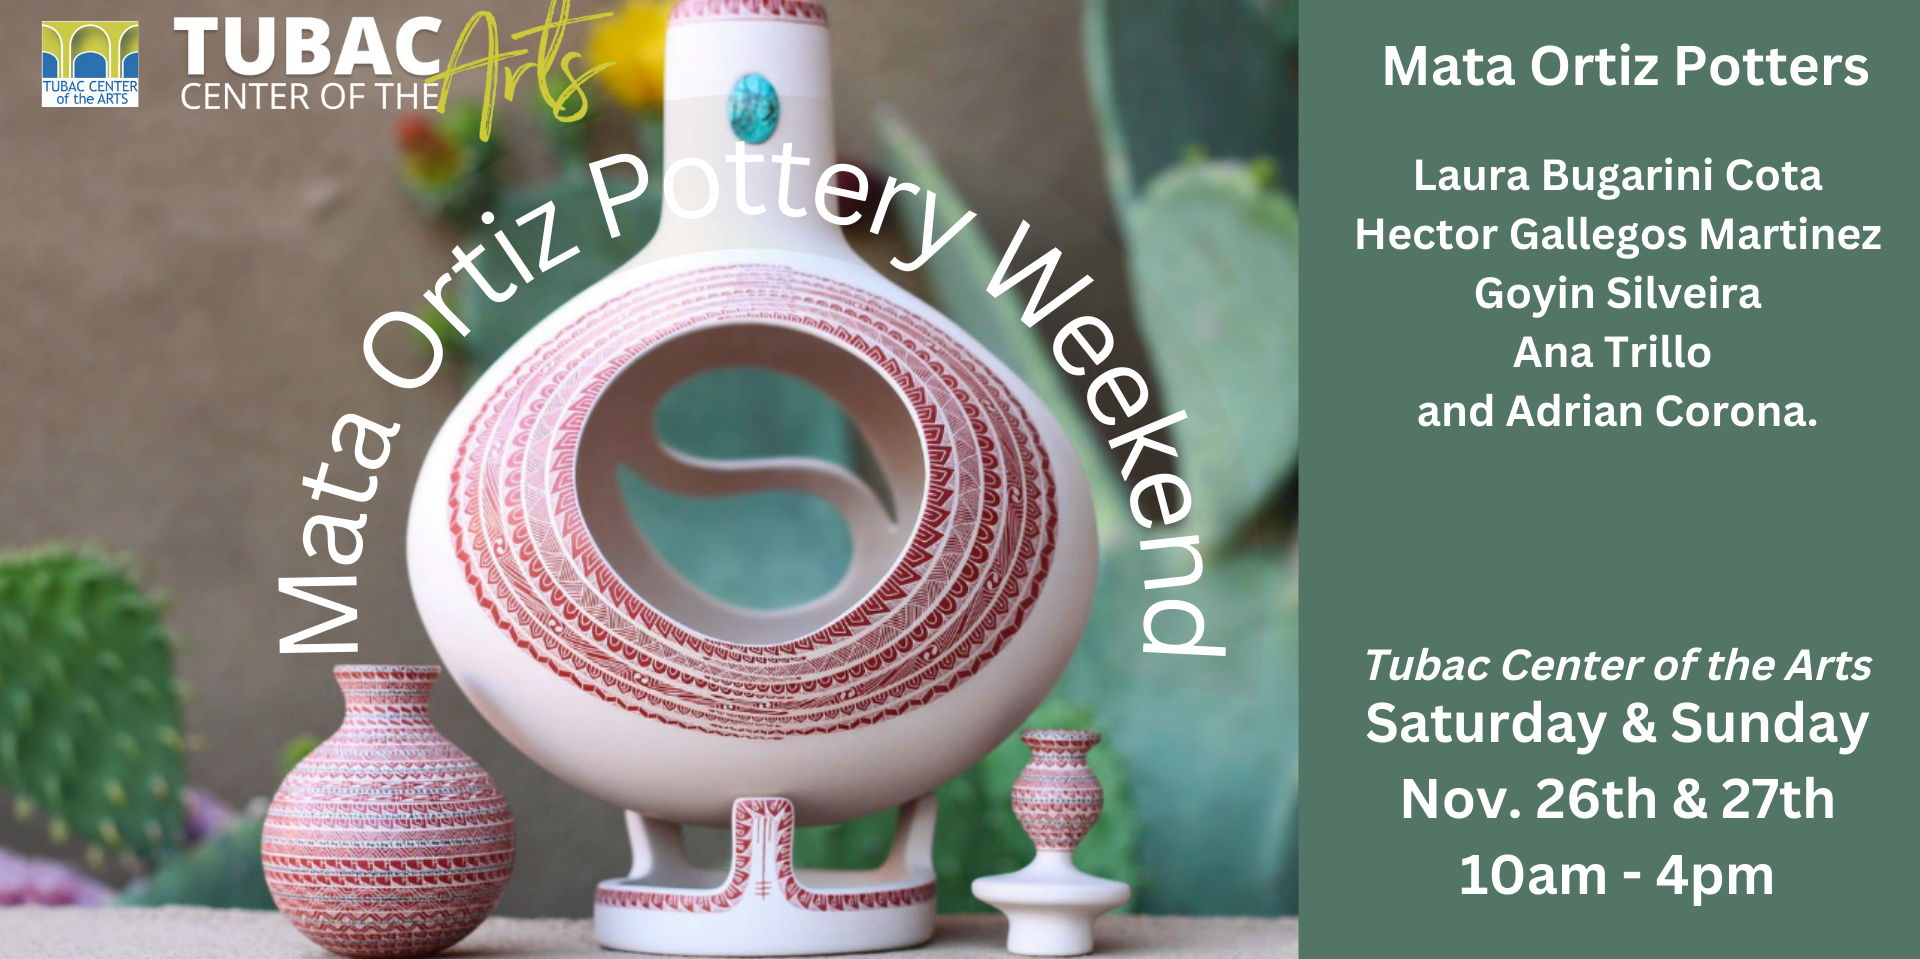 Mata Ortiz Pottery Weekend promotional image